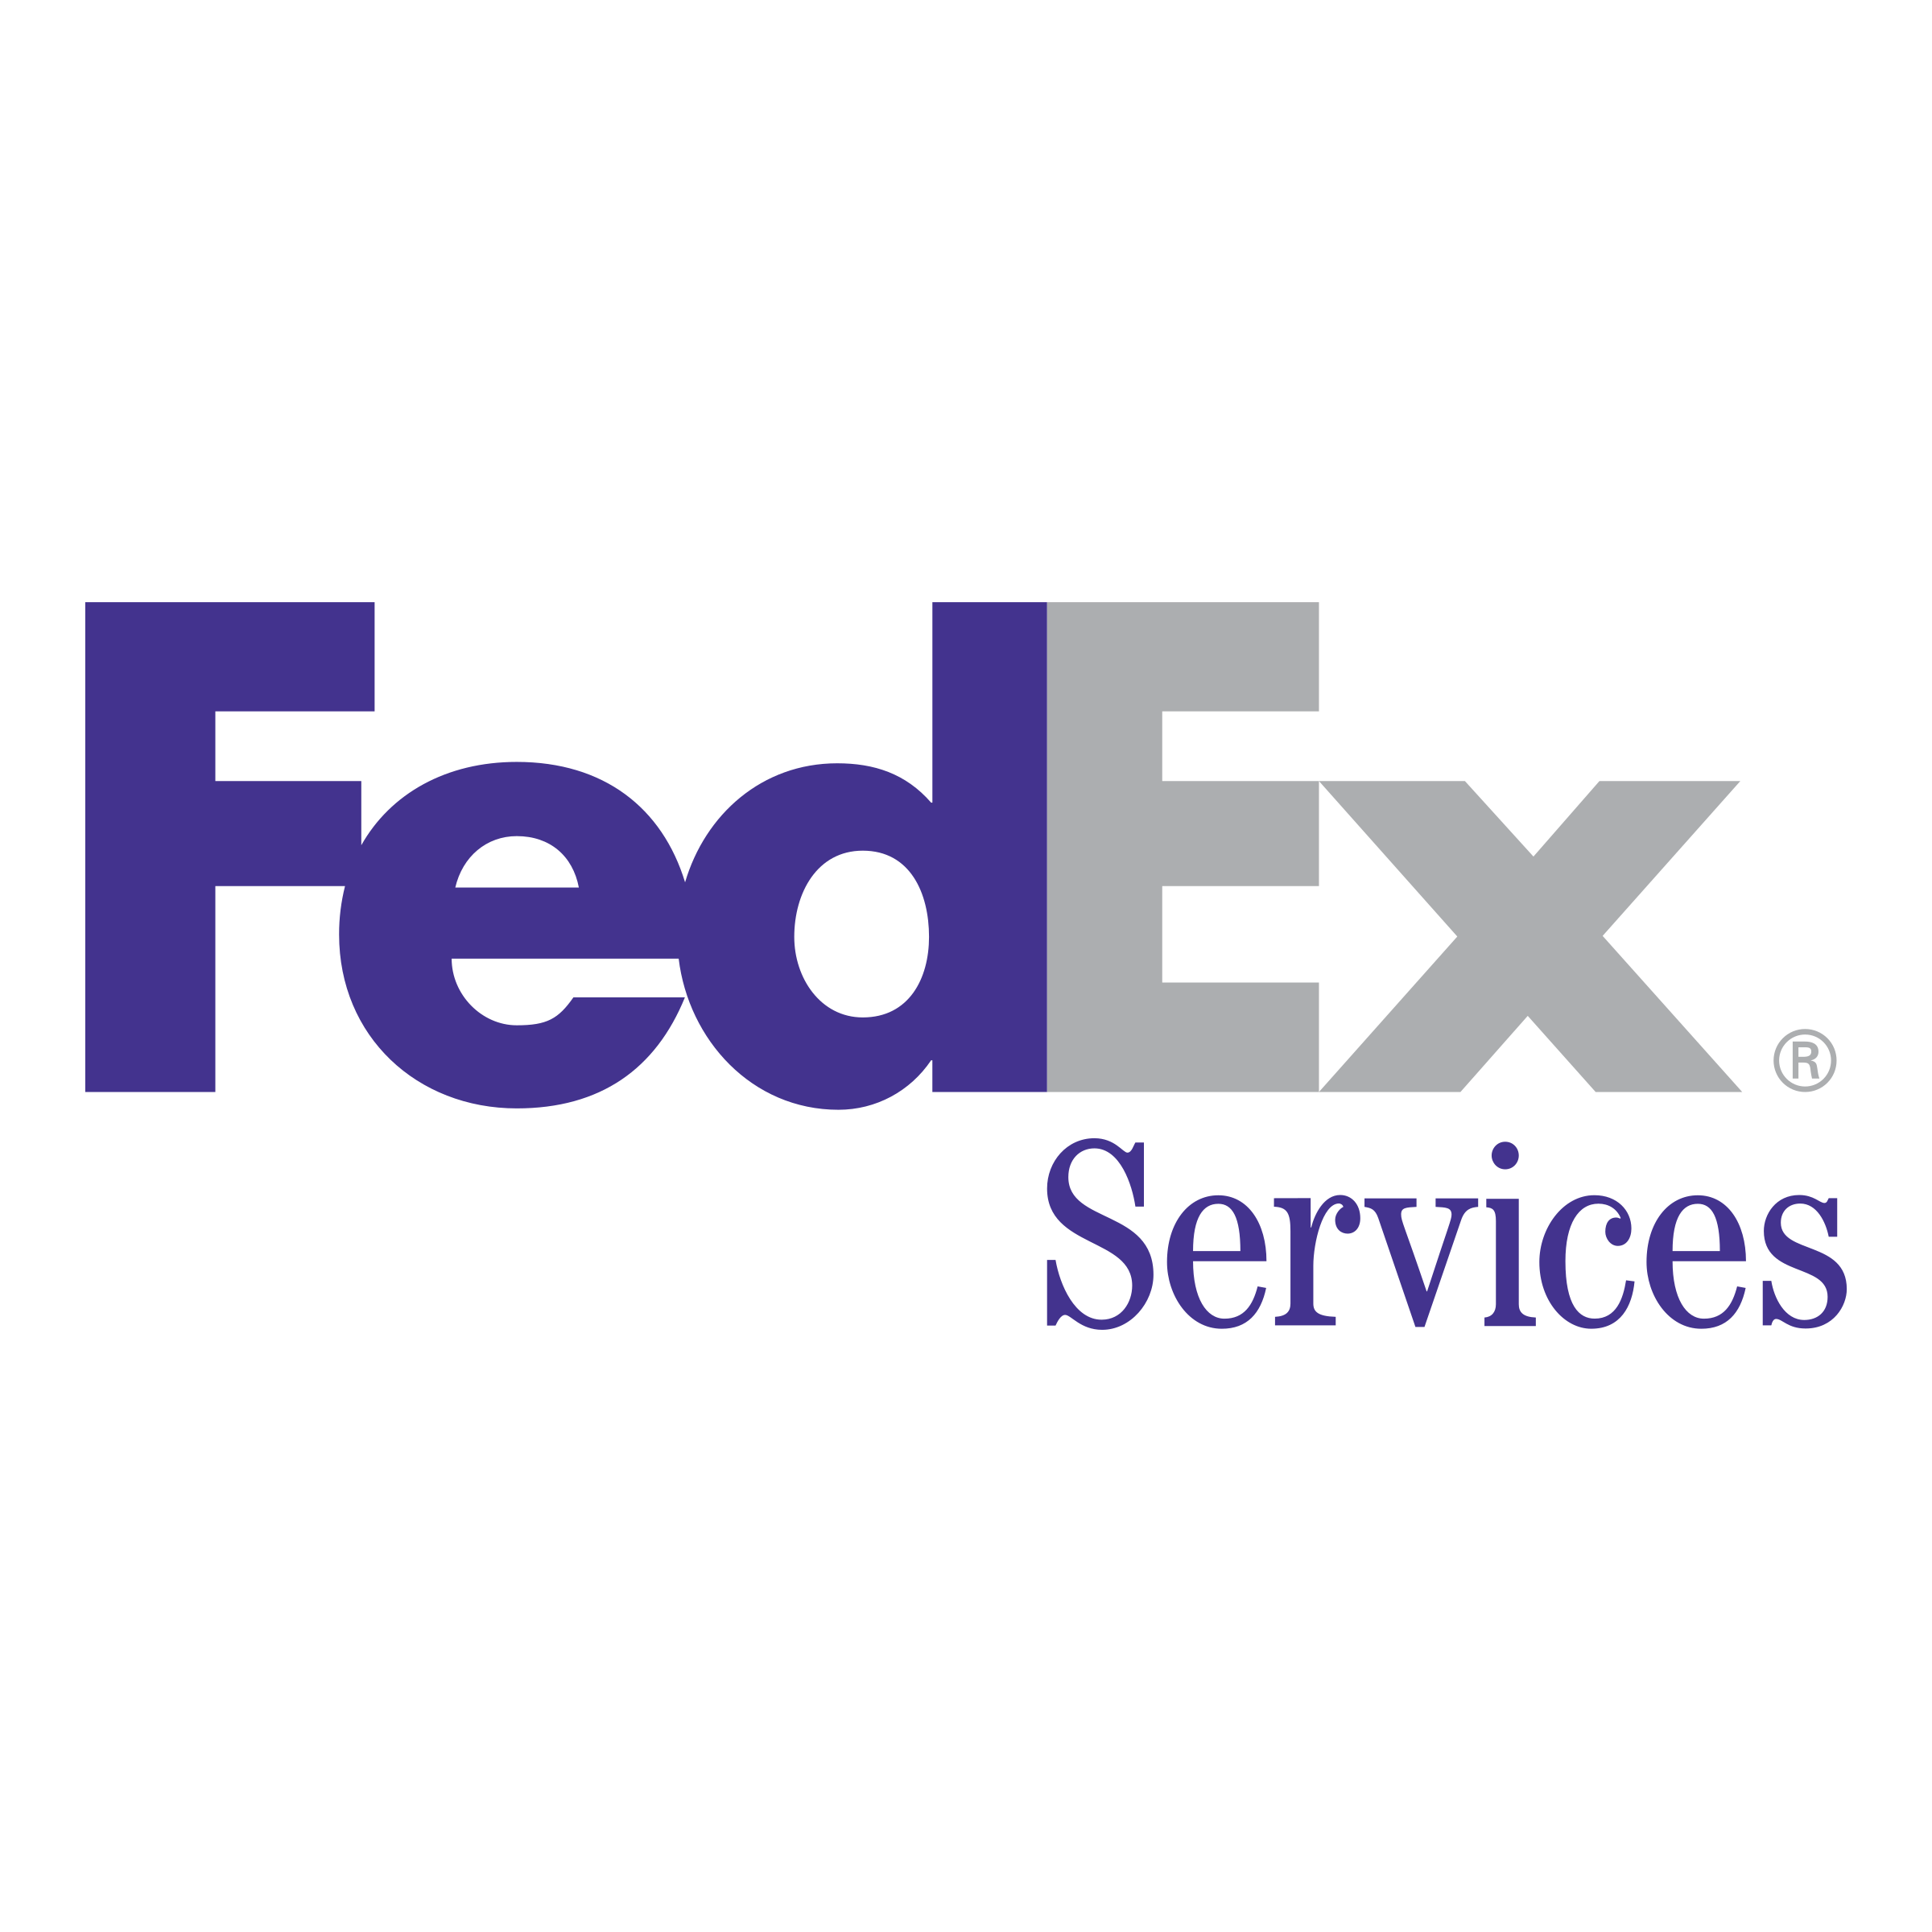 Fedex Logo PNG HD Image